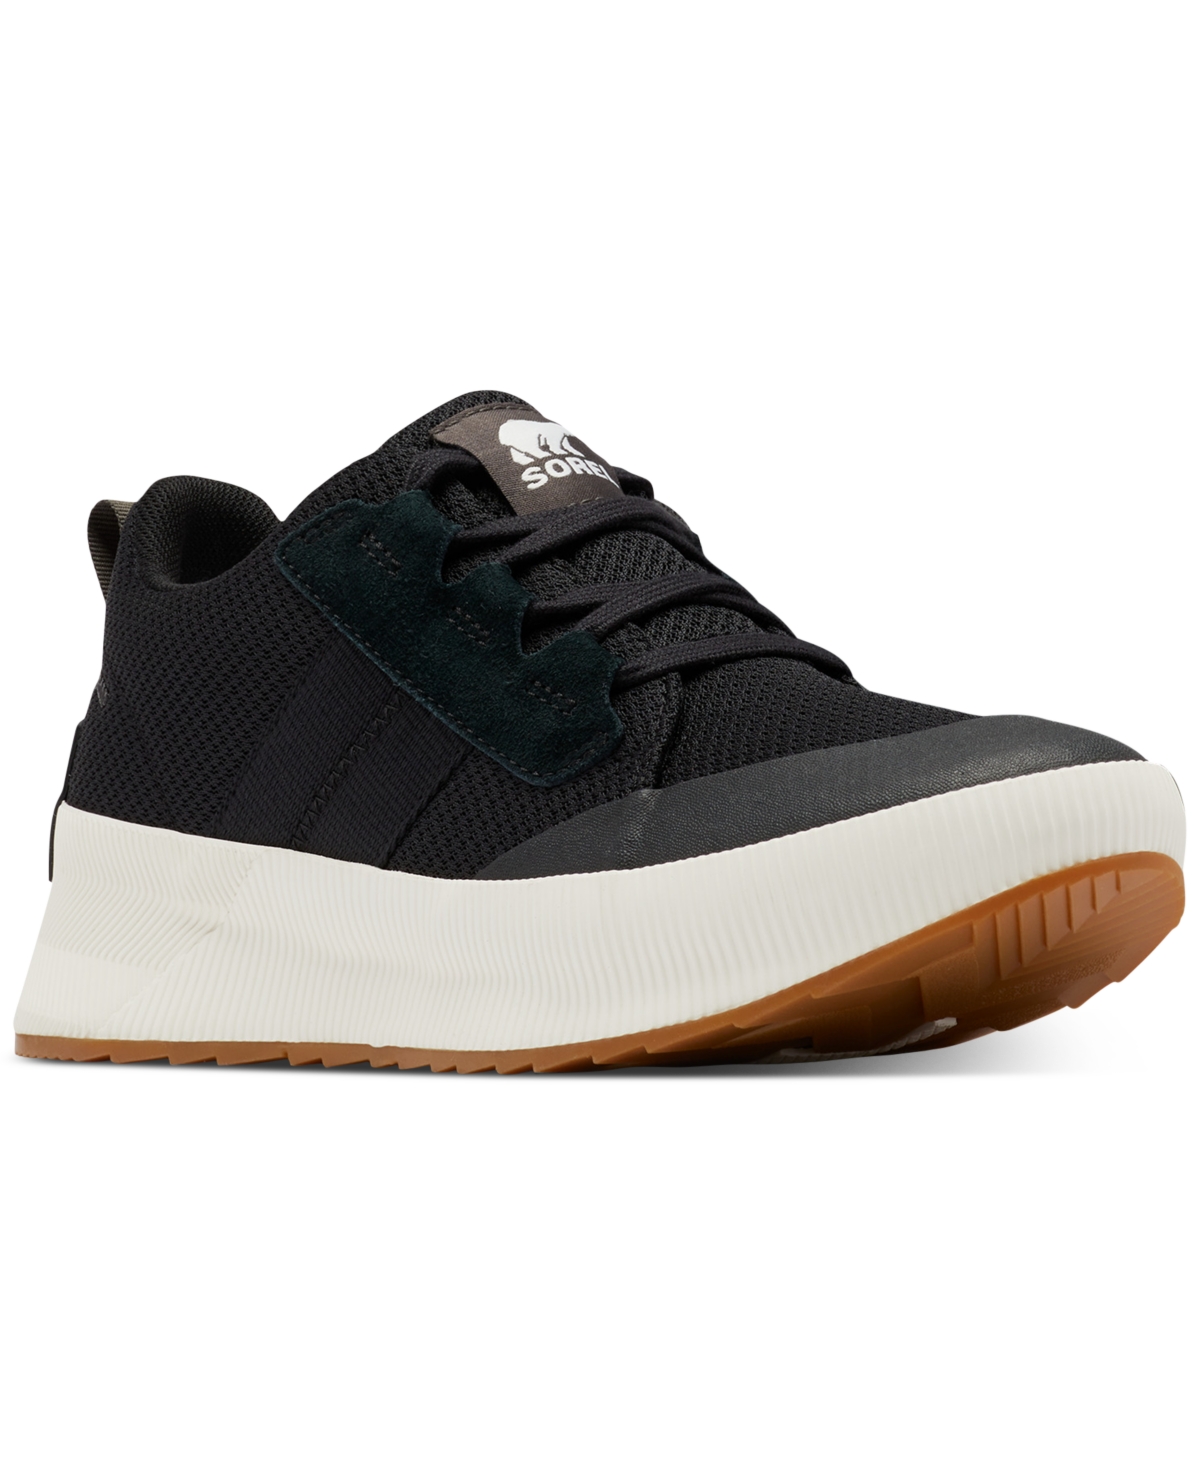 Size 8.5 SOREL Out N About Waterproof Low Top Sneaker in Black/Sea Salt at Nordstrom, S